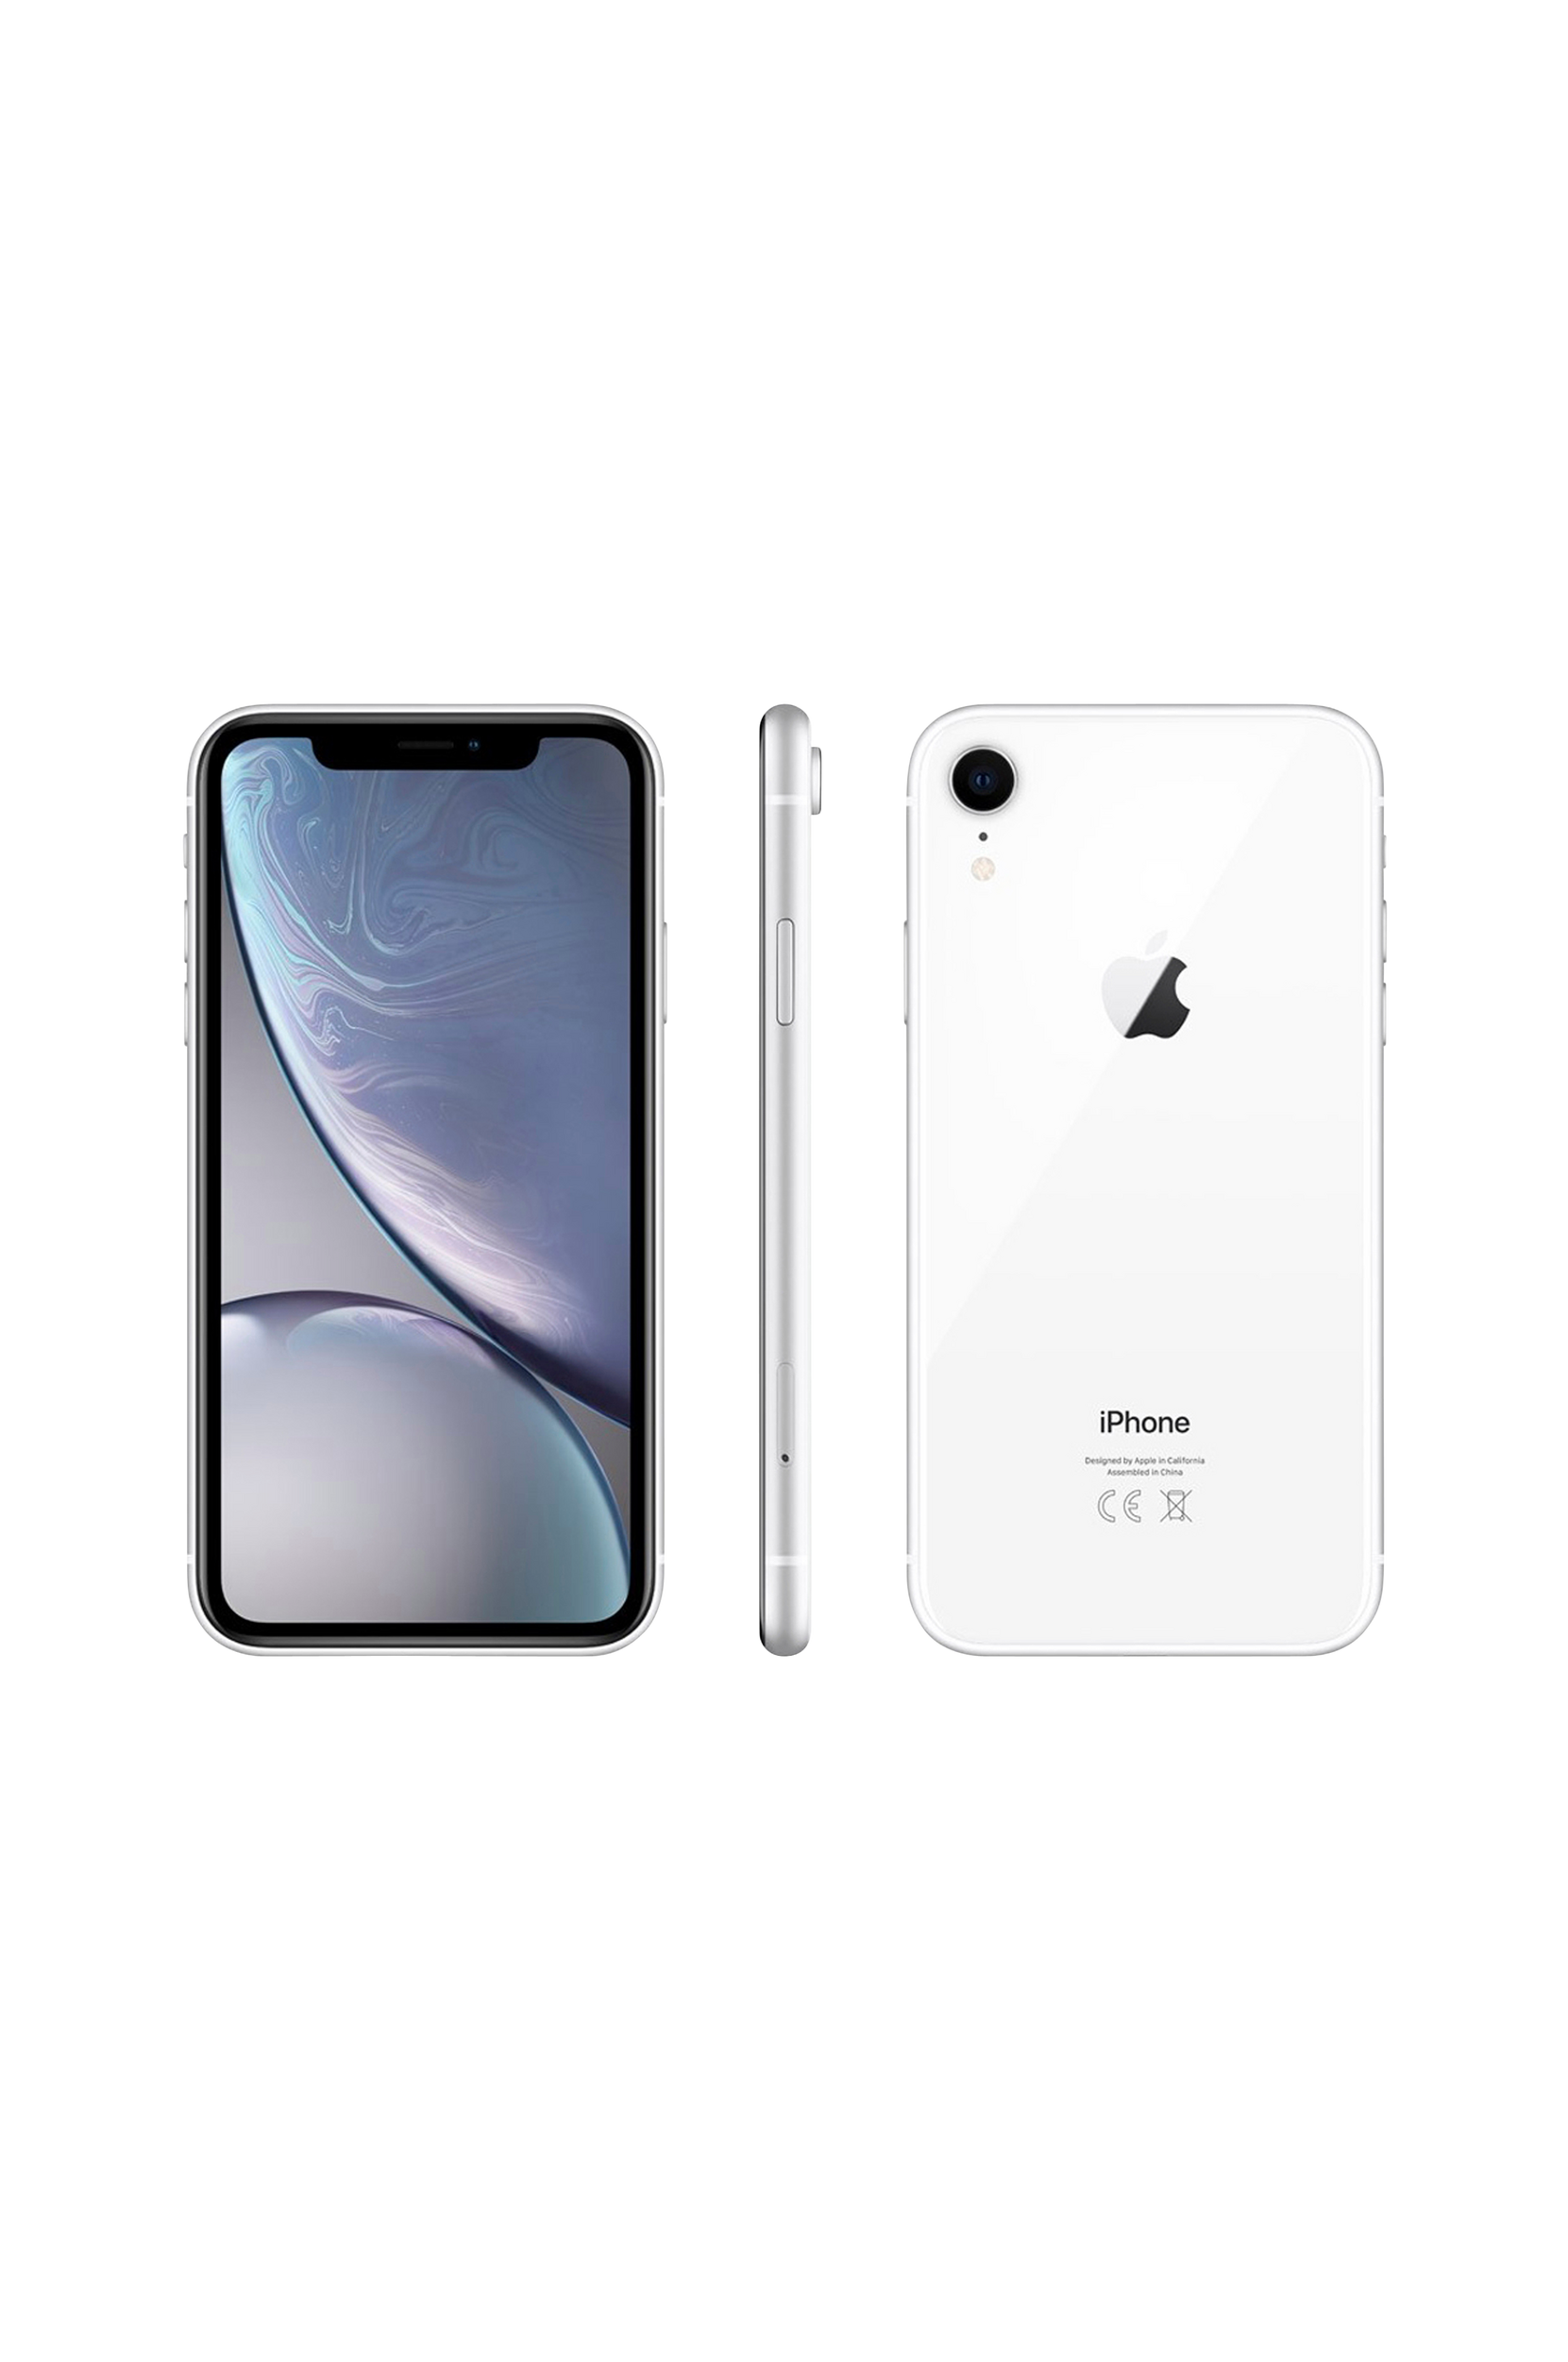 iPhone XR 64GB White MRY52, Apple